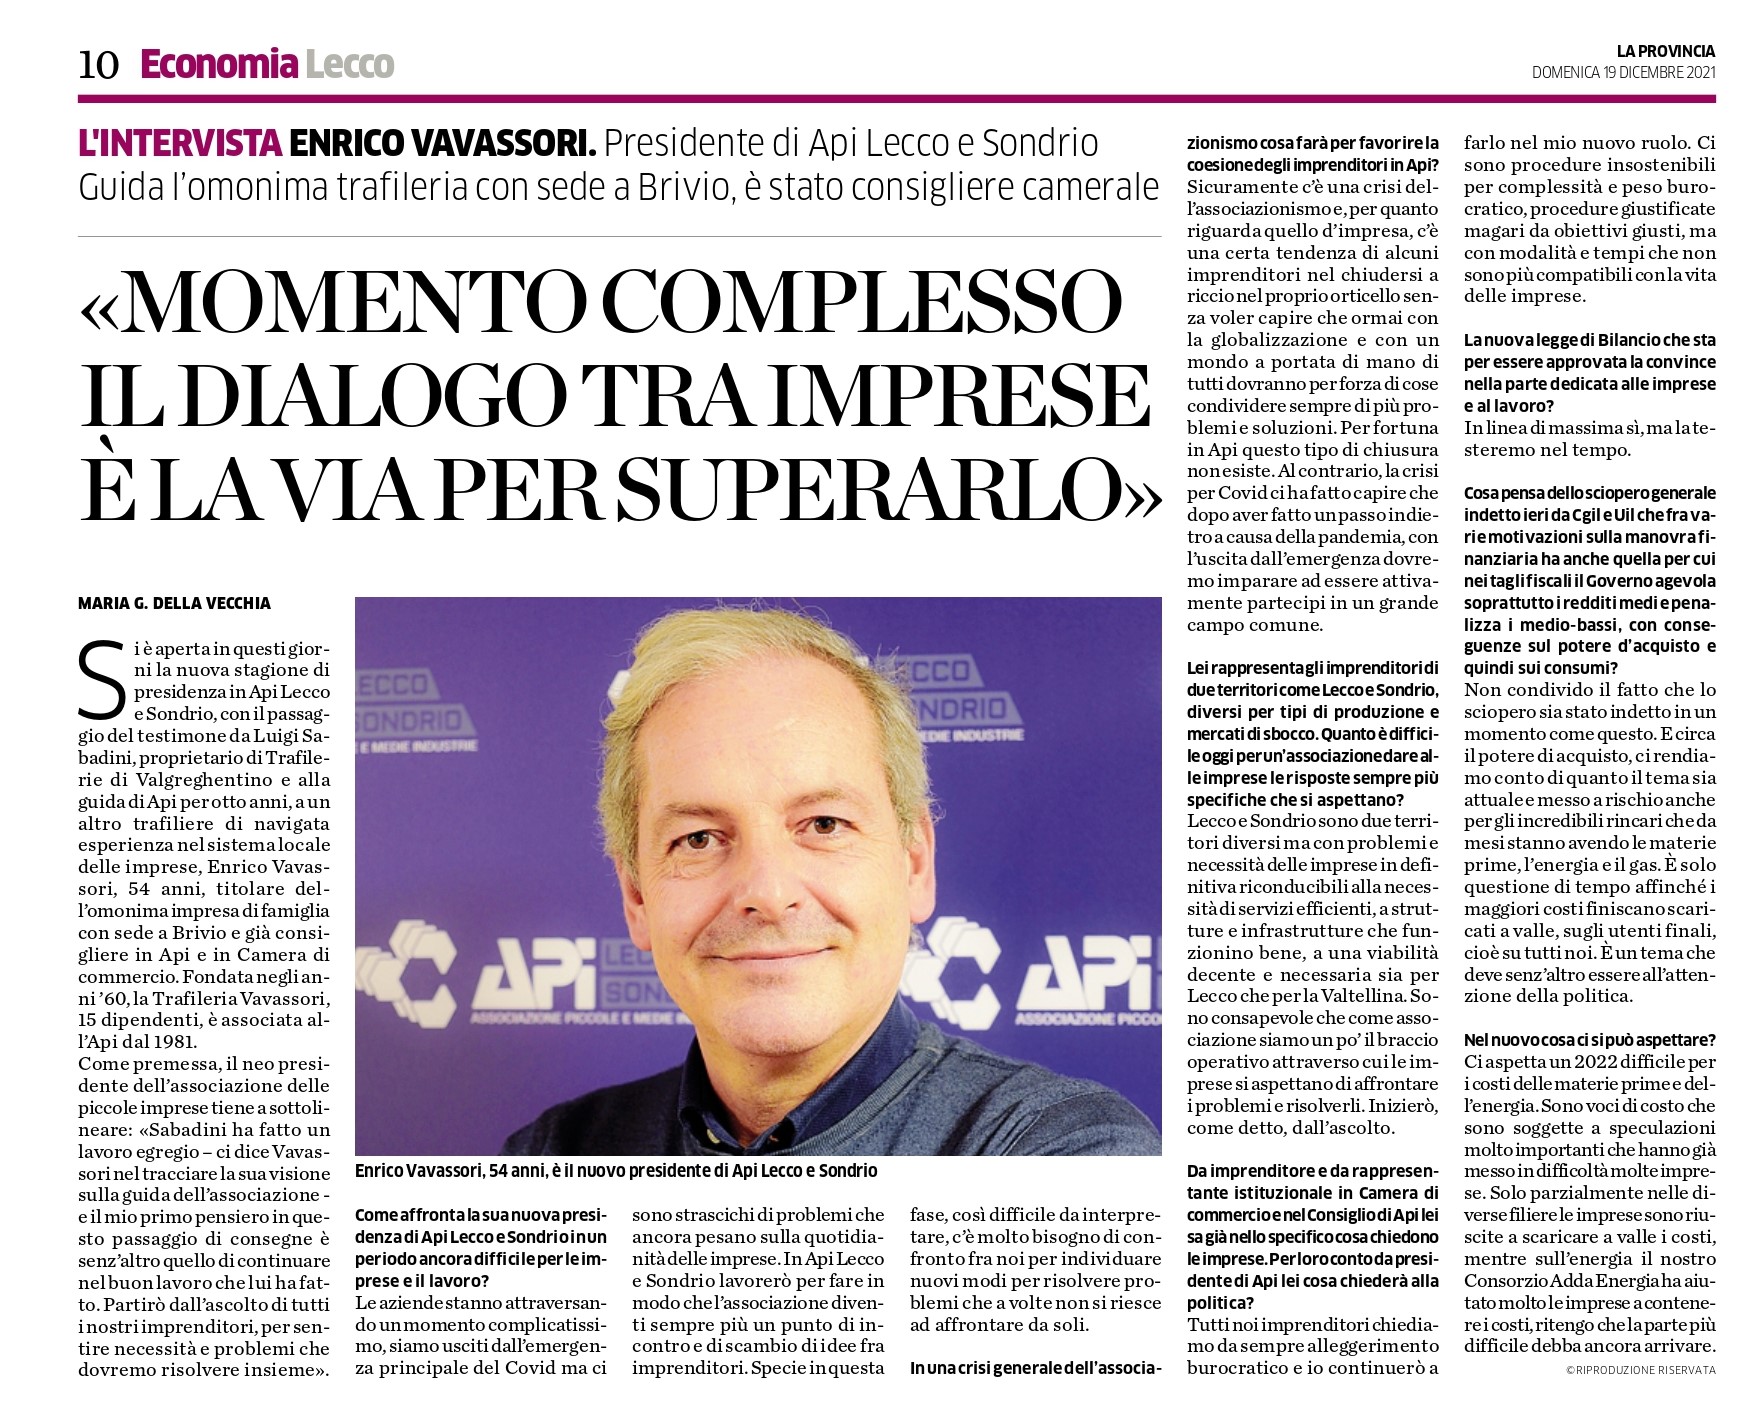 La Provincia intervista Enrico Vavassori